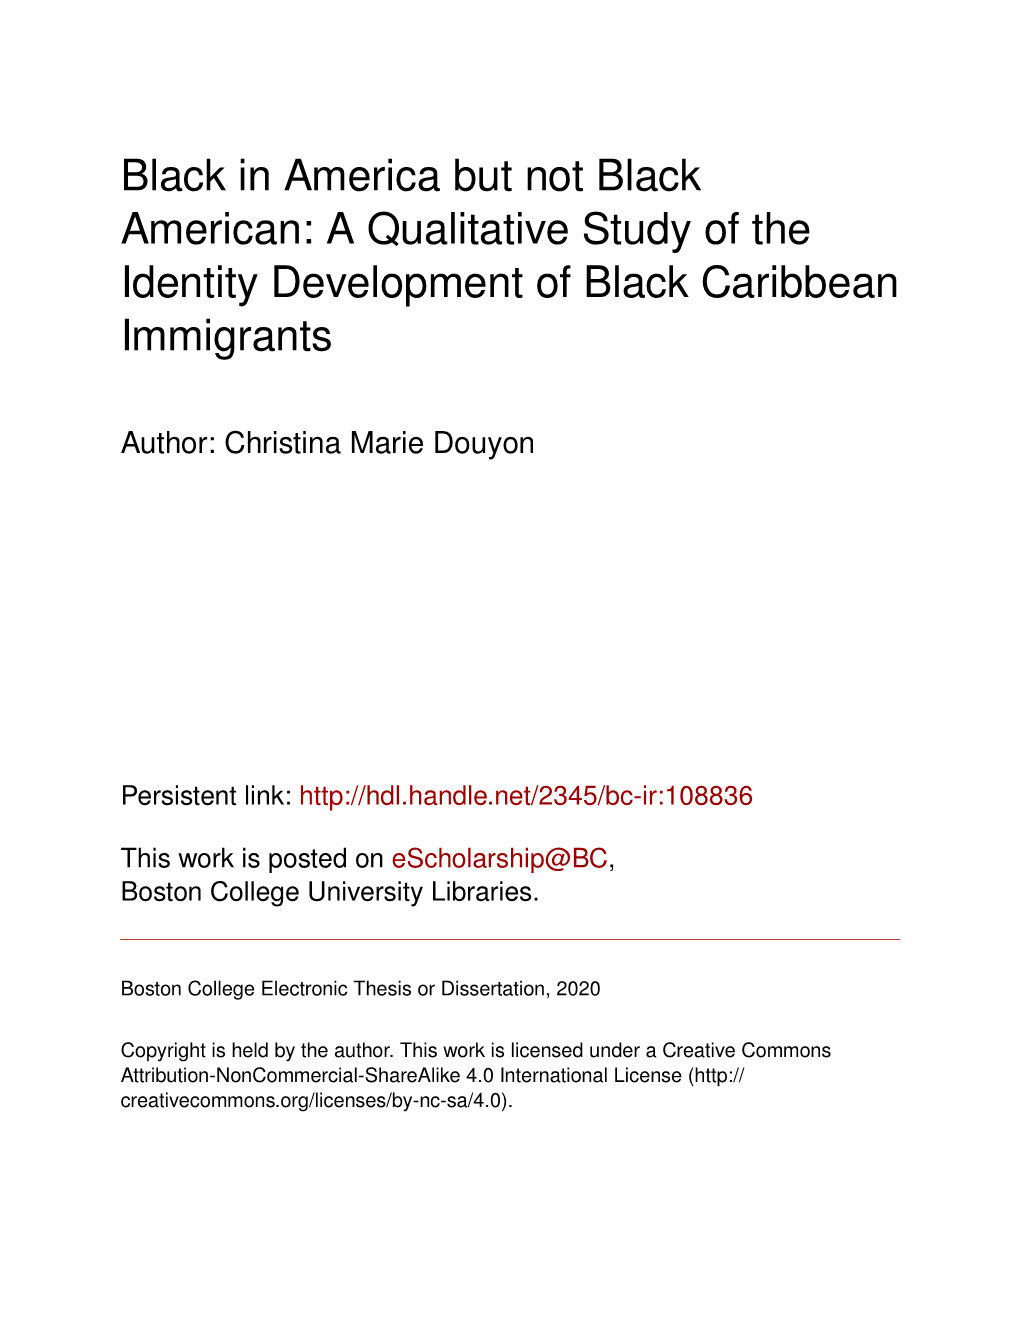 Black in America but Not Black American: a Qualitative Study of the Identity Development of Black Caribbean Immigrants